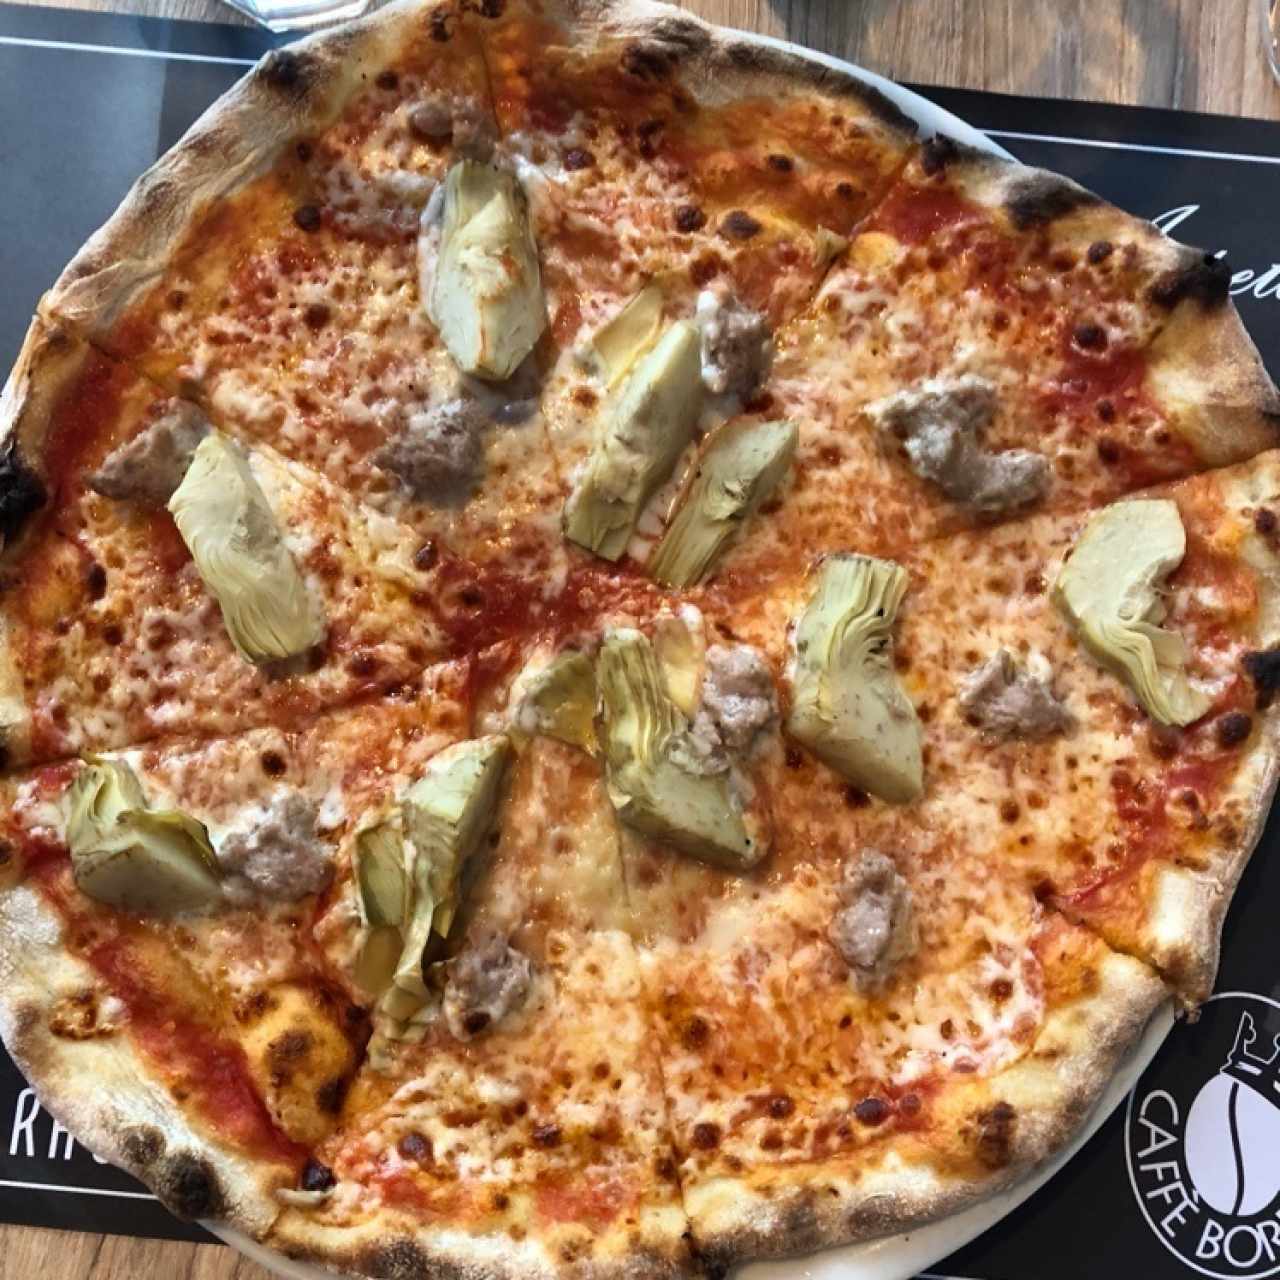 pizza carciofoni de salsiccia italiana (special)